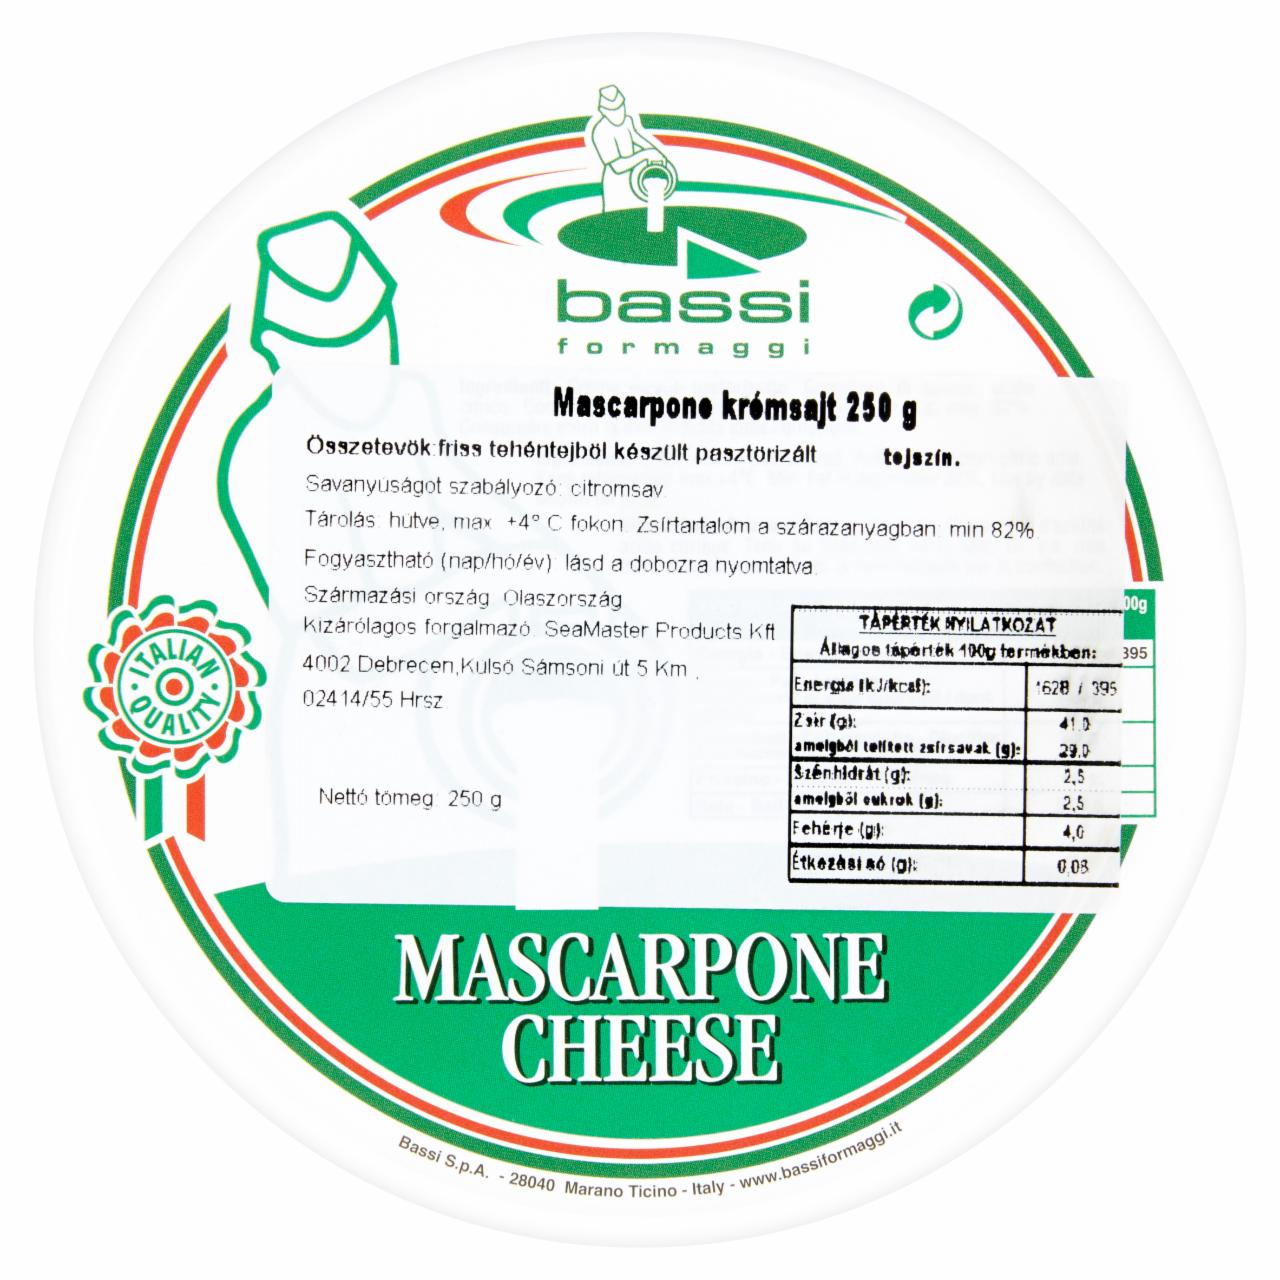 Képek - Bassi Formaggi mascarpone krémsajt 250 g